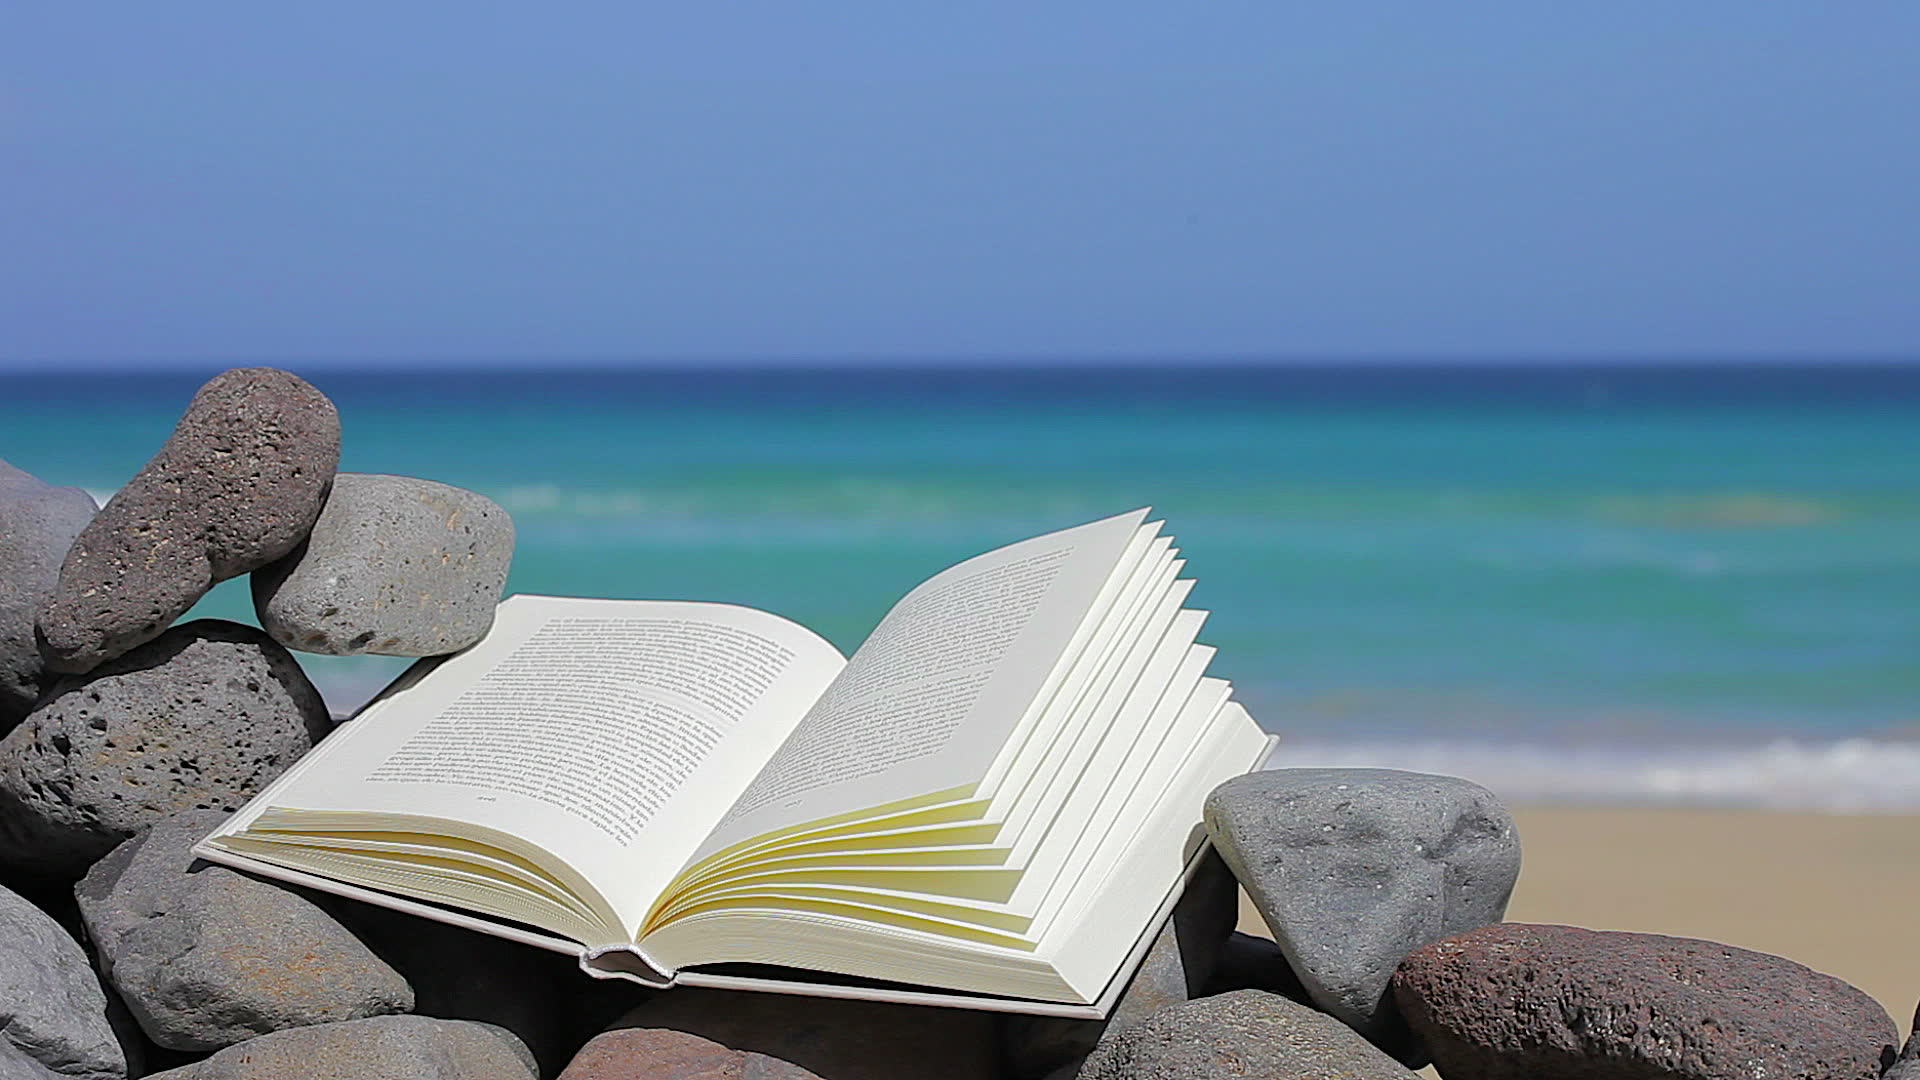 Books On The Beach - HD Wallpaper 